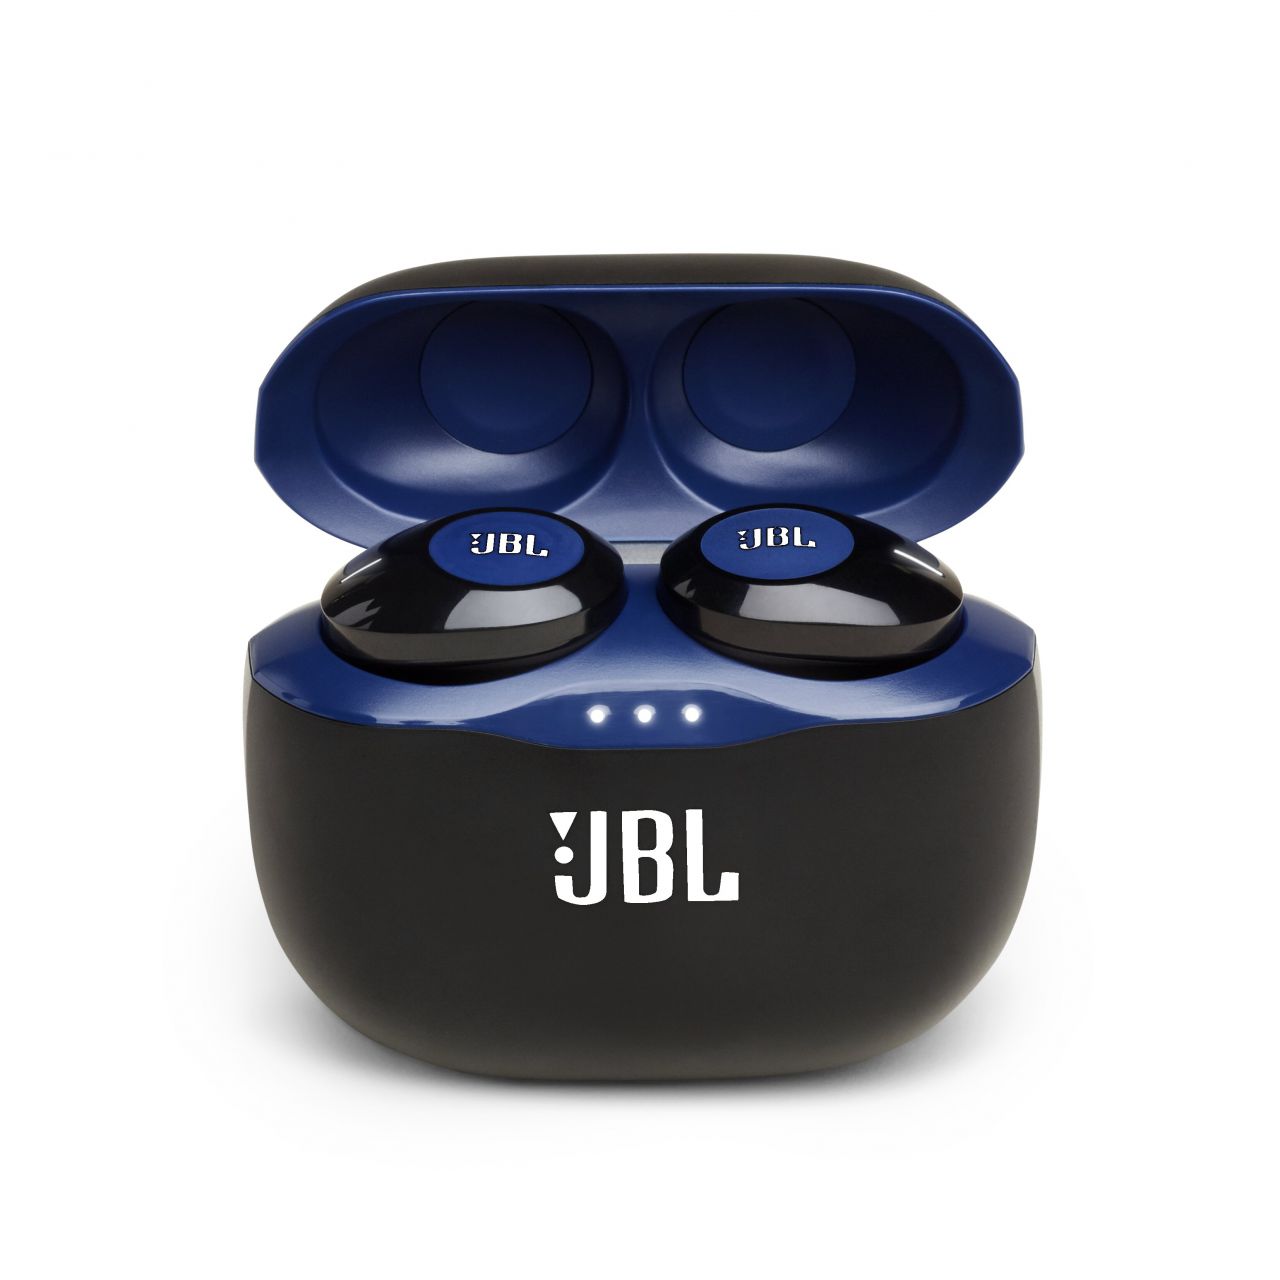 JBL Tune 120TWS